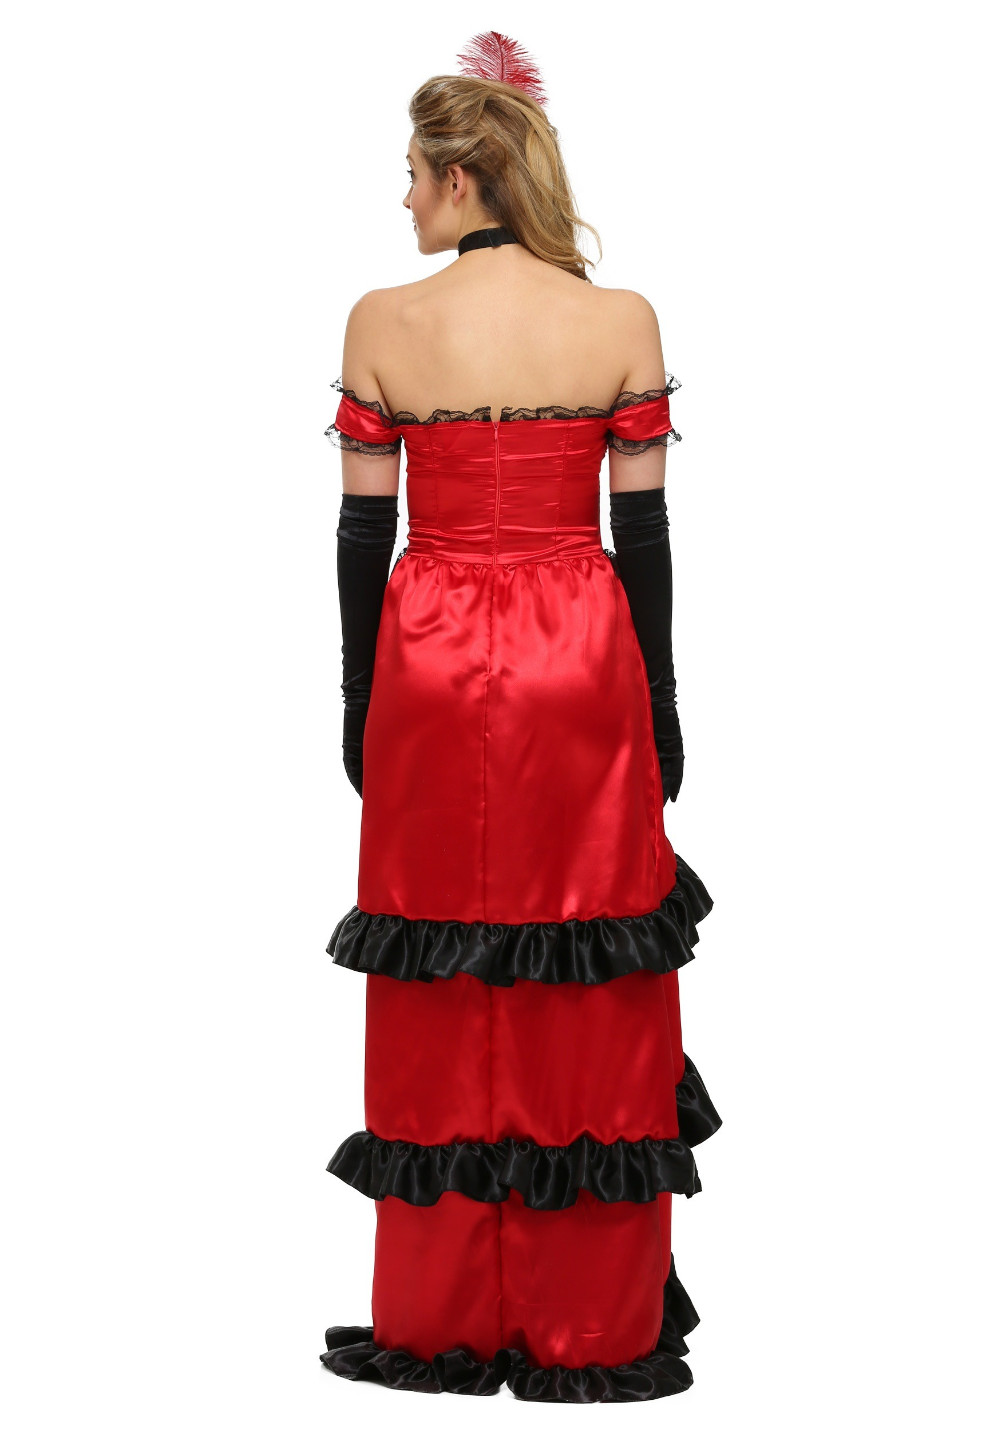 Irek Adult Plus Size Saloon Girl Costume Classic Halloween Cosplay Costume For Carnival 9710